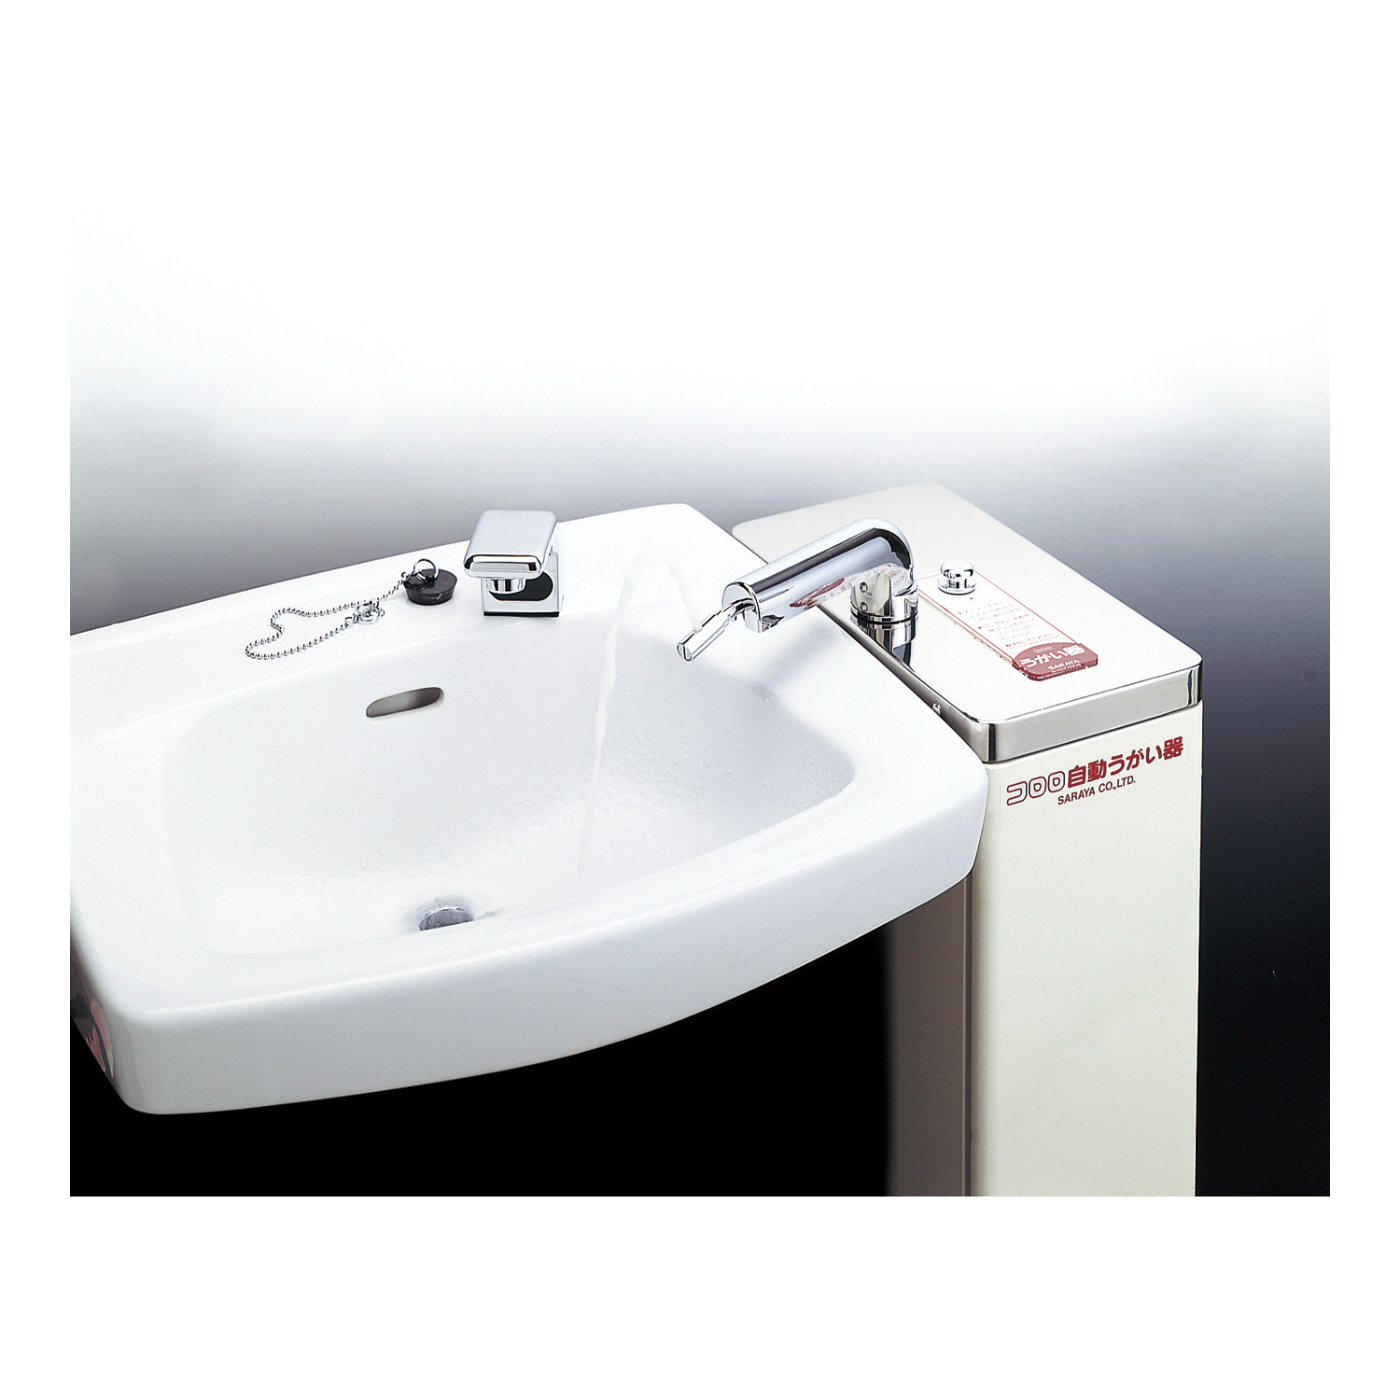 CO-SR型 洗面台 横付型 CO-SR型 製品情報 サラヤ業務用製品情報 PRO SARAYA